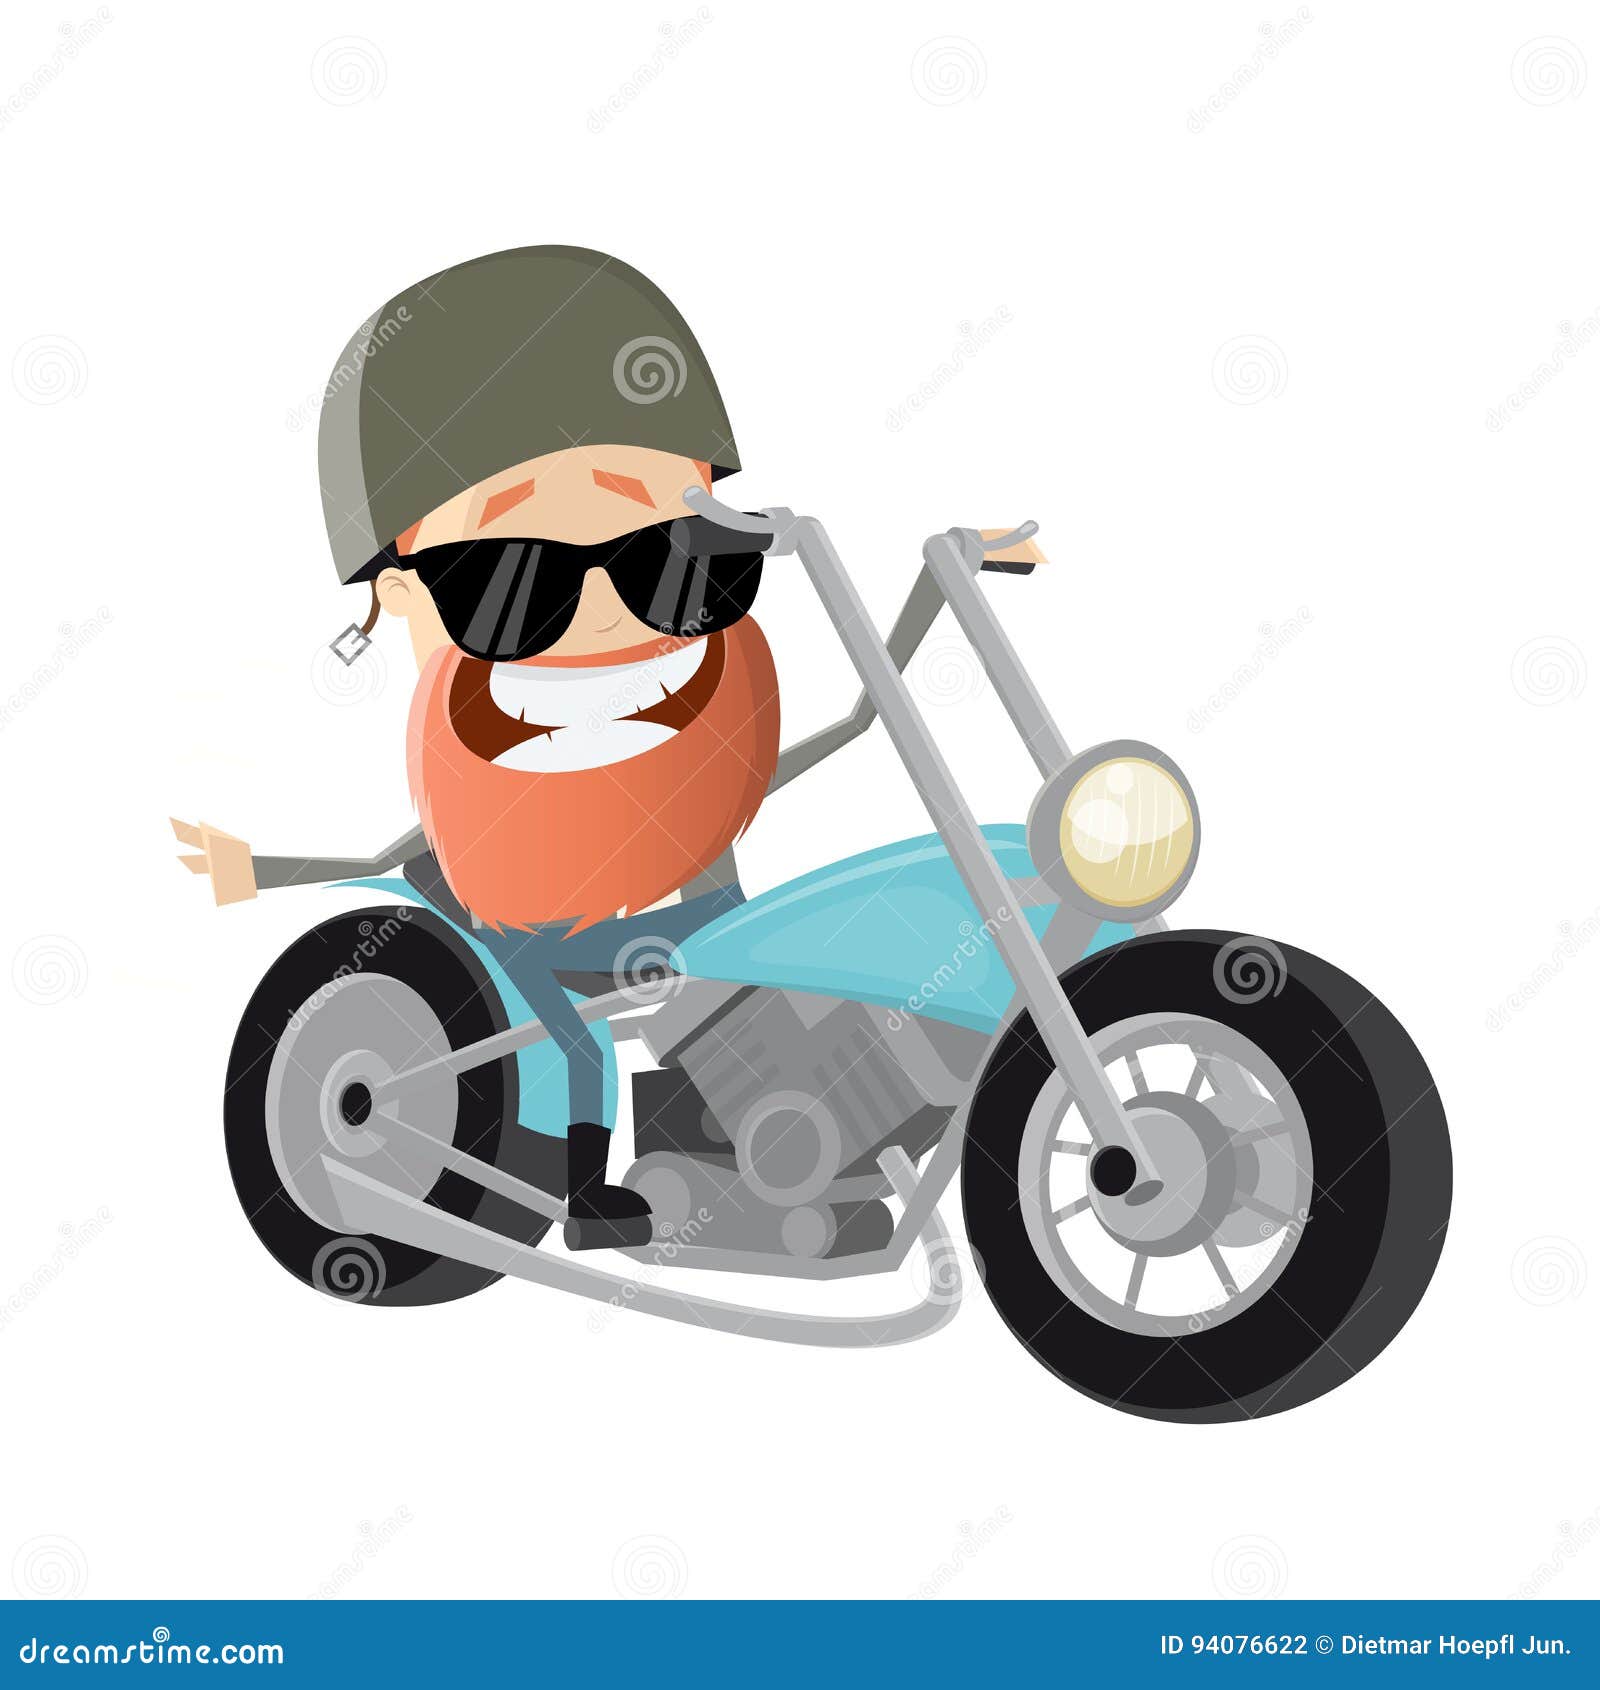 Funny Cartoon Biker on Motorcycle Stock Vector - Illustration of funny,  motif: 94076622